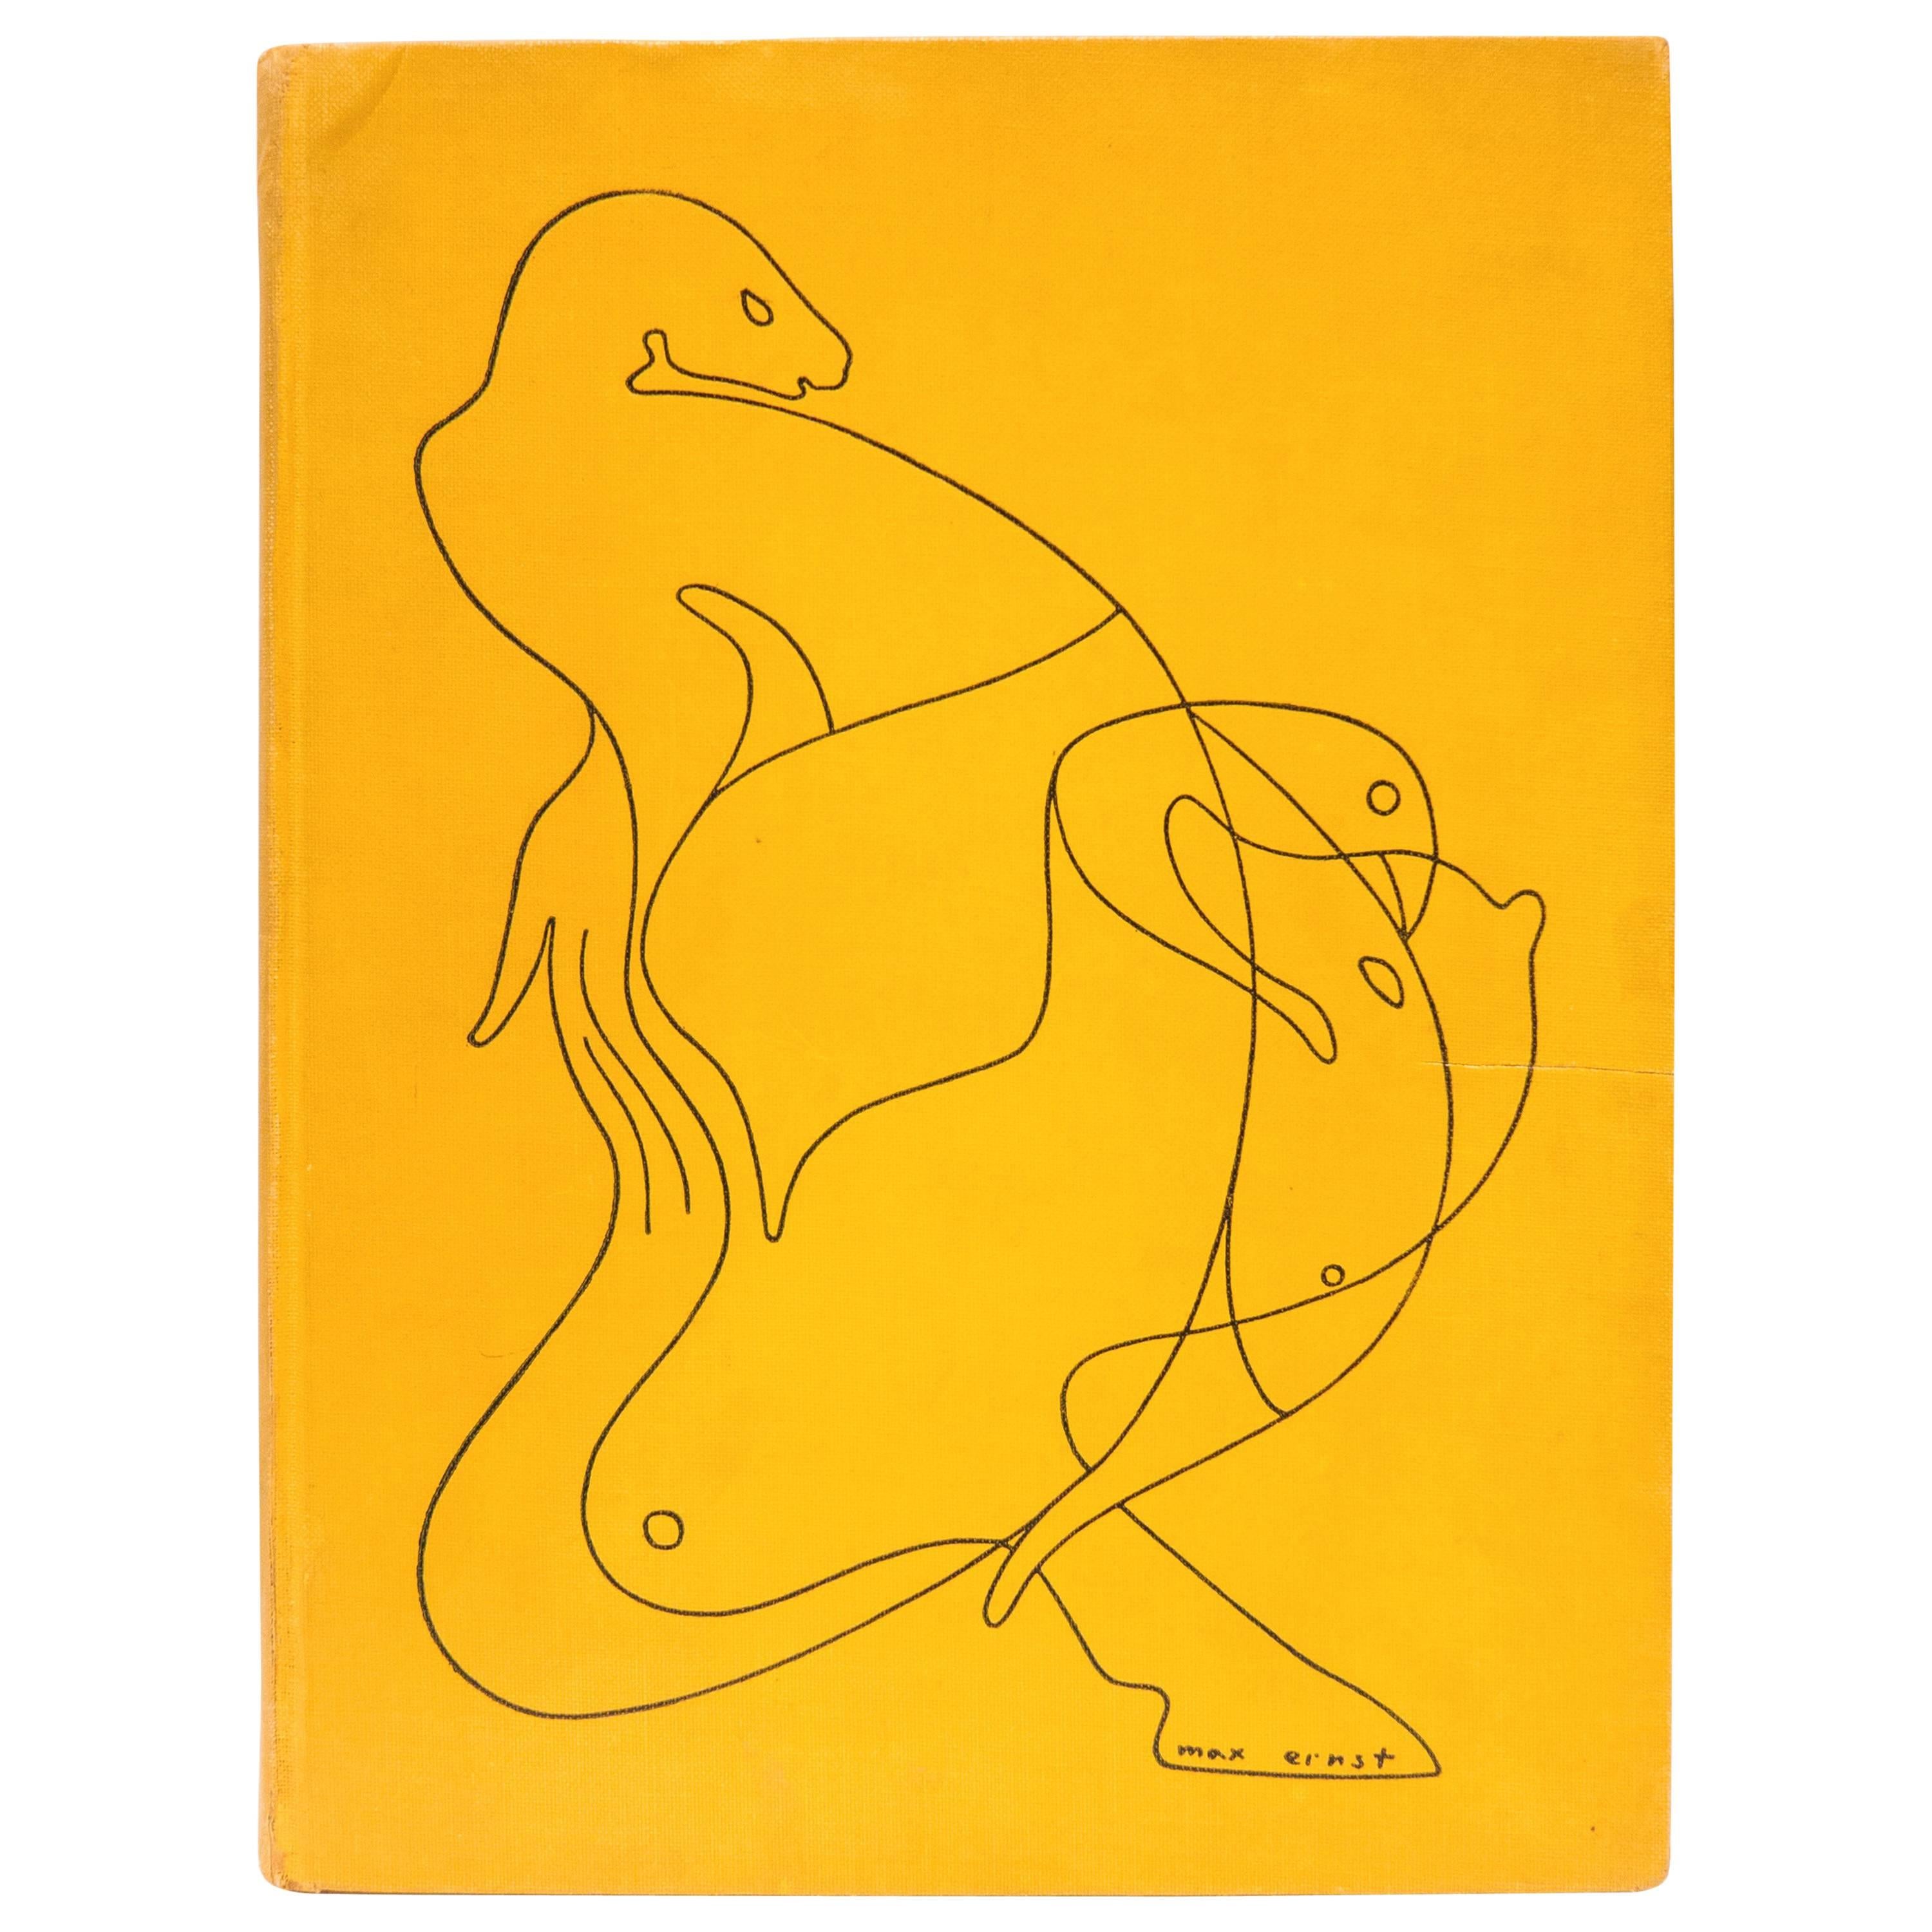 Peggy Guggenheim "Art of This Century" Book